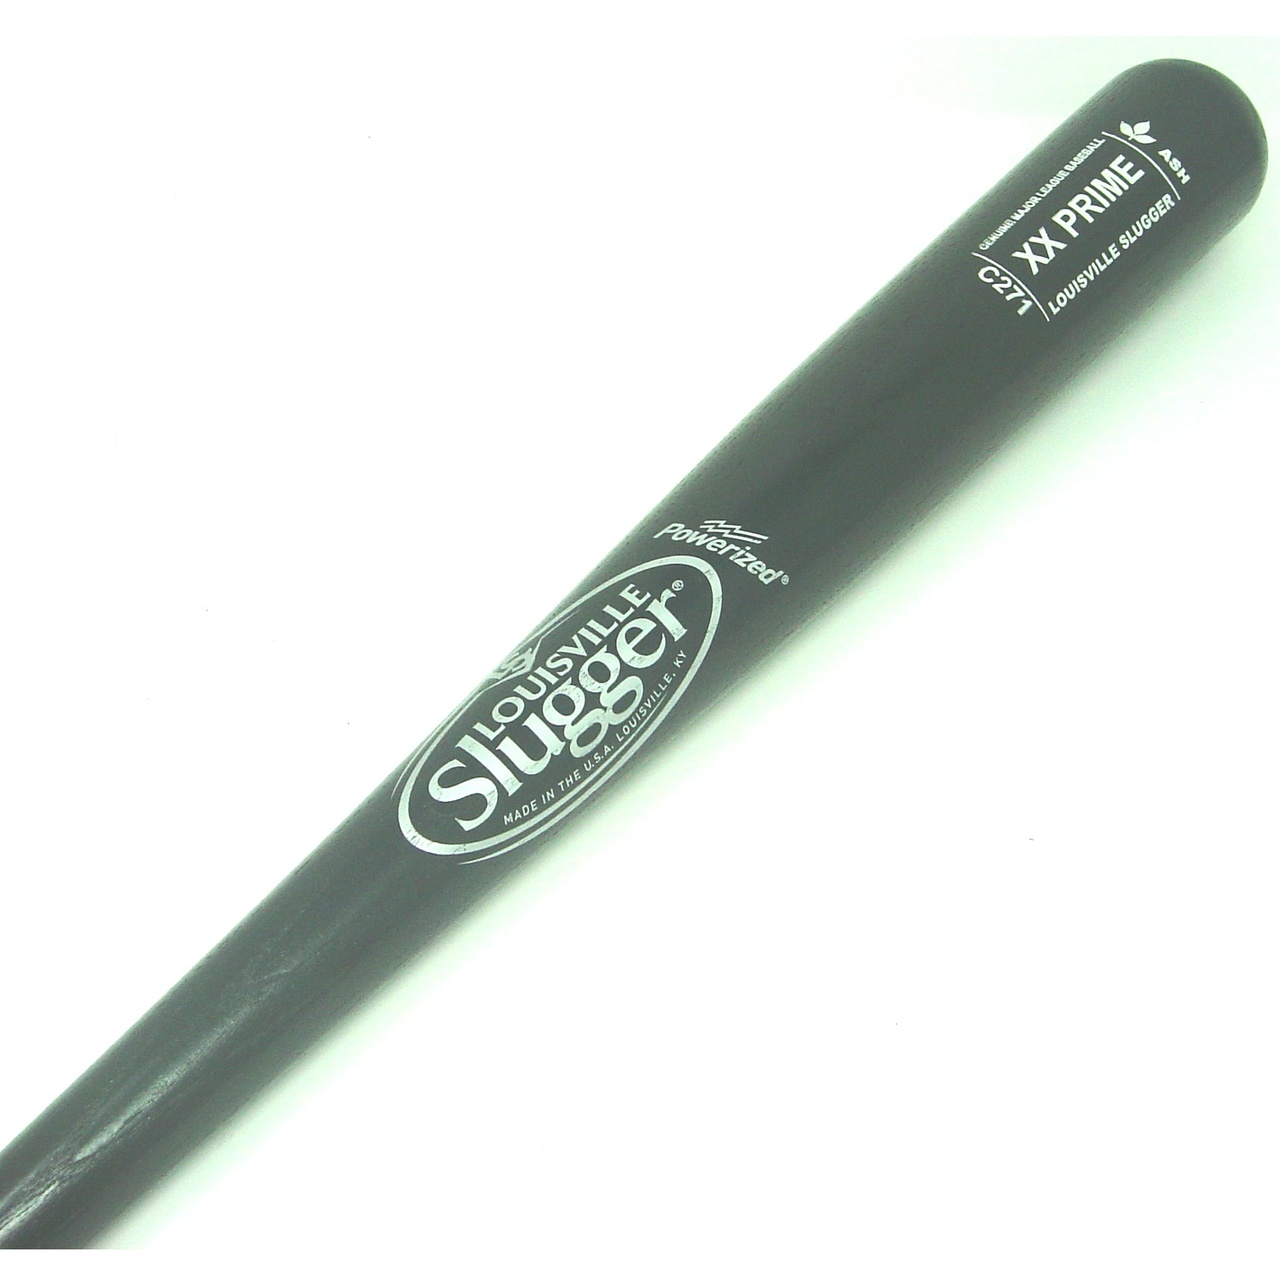 louisville-slugger-xx-prime-ash-pro-c271-not-cupped-wood-baseball-bat-33-5 WBXA14P71NBK335 Louisville  Classic Louisville Slugger wood baseball bat sold to the Major League